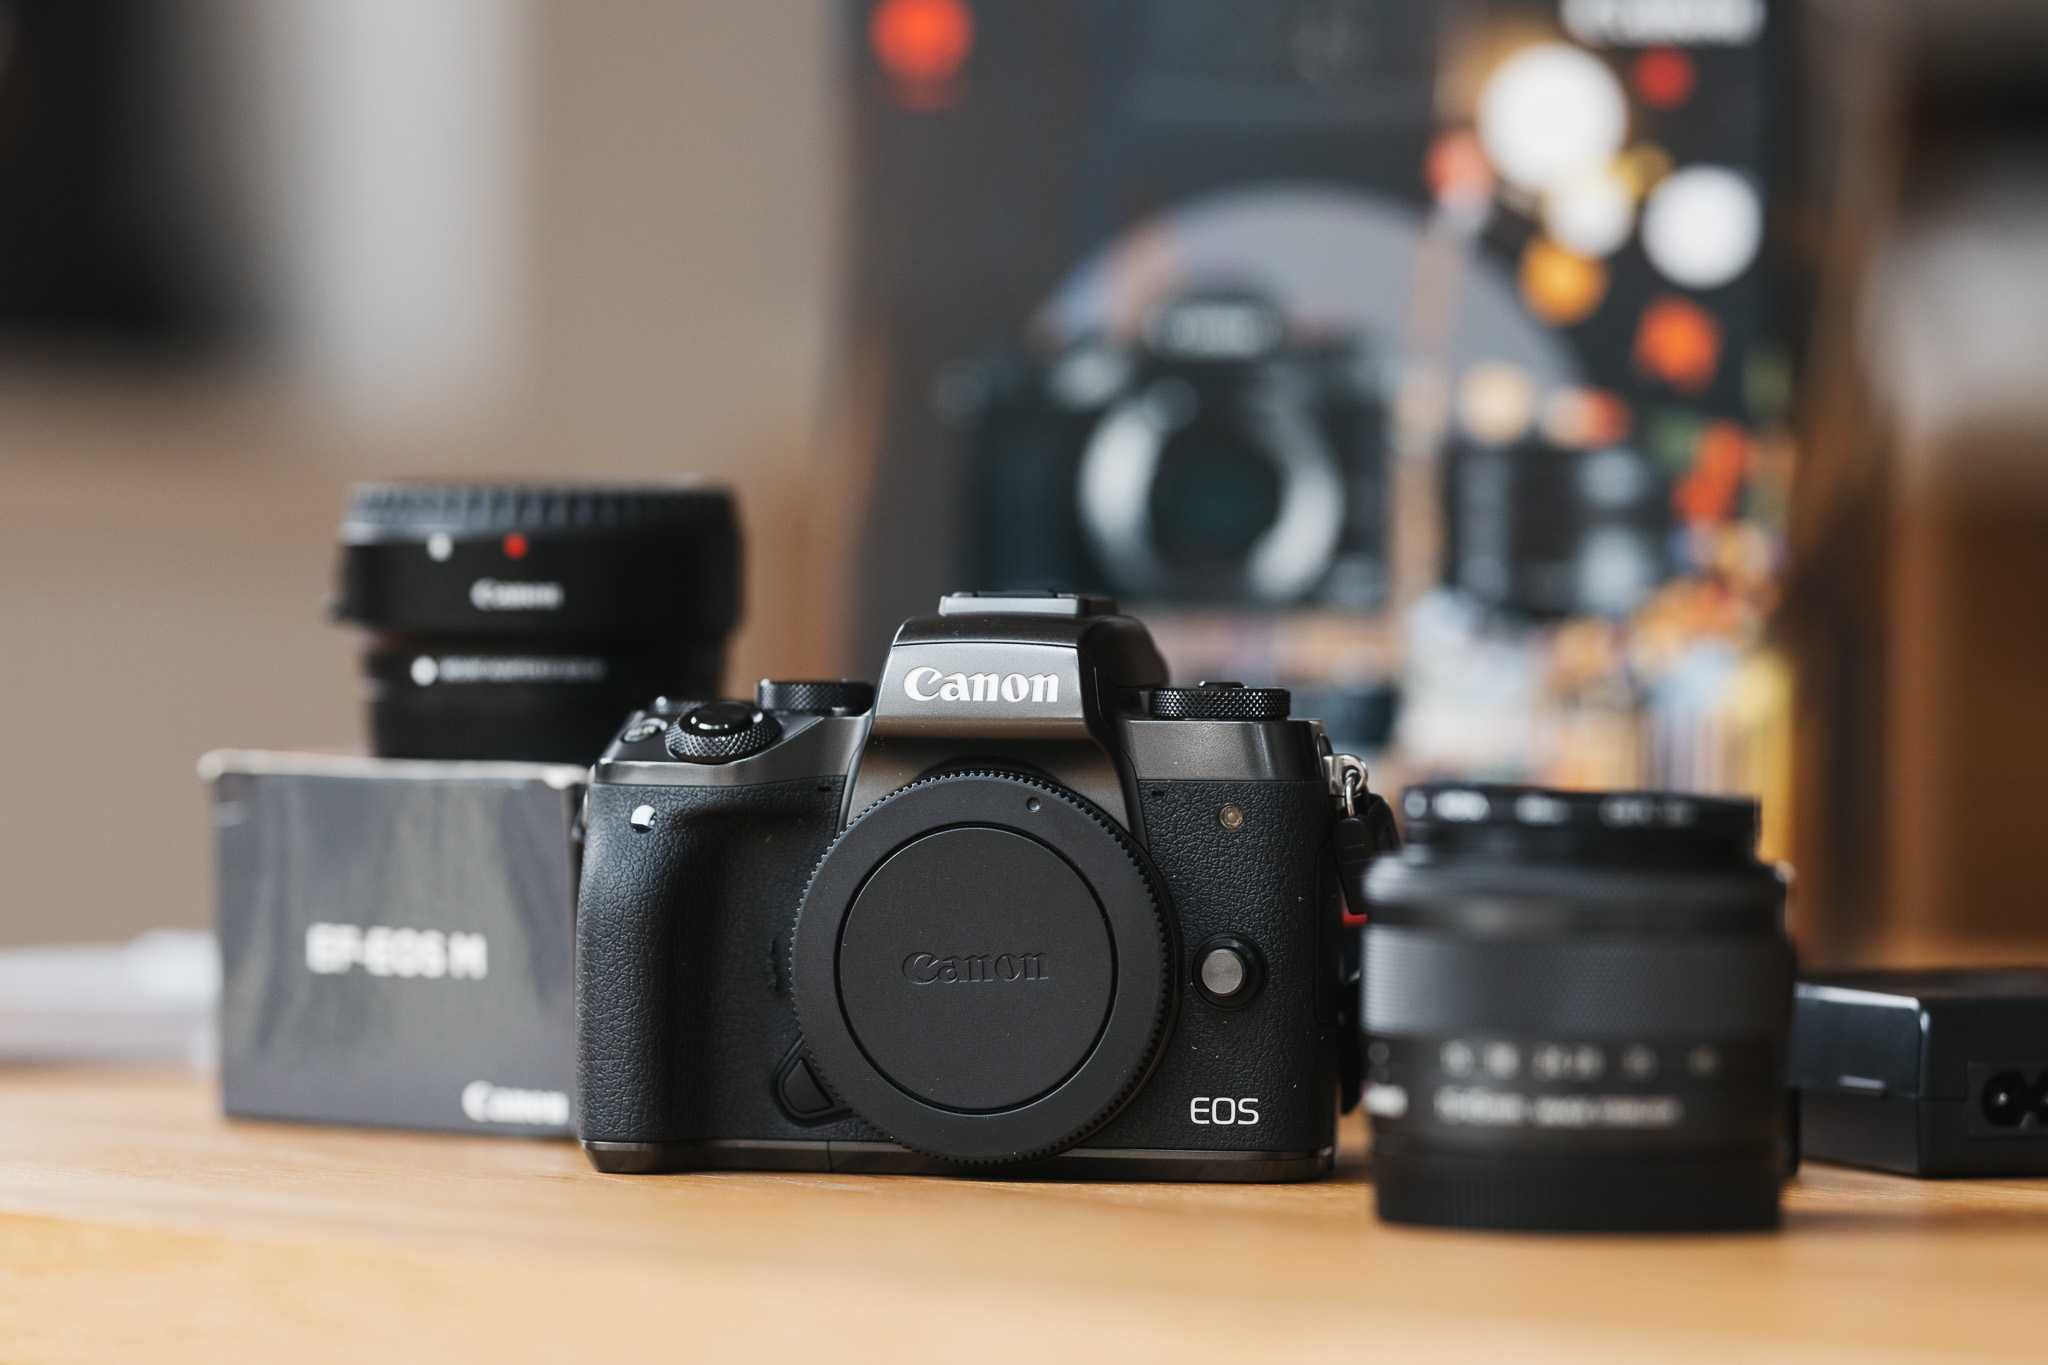 Canon EOS M5 + oryginalny zestaw: obiektyw, adapter, baterie, filtr